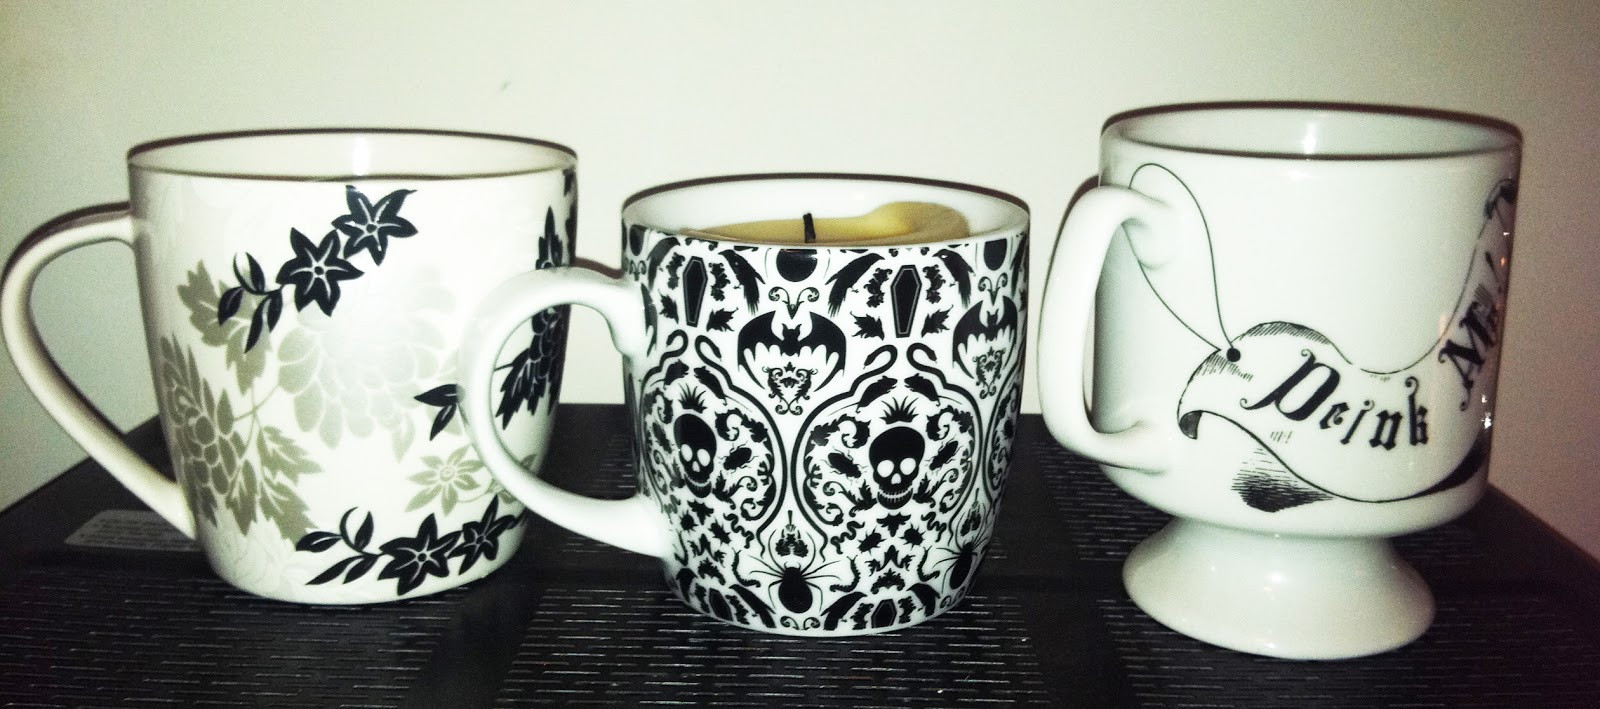 Best ideas about DIY Coffee Mug
. Save or Pin hocus kocis DIY coffee mug candlesticks Now.